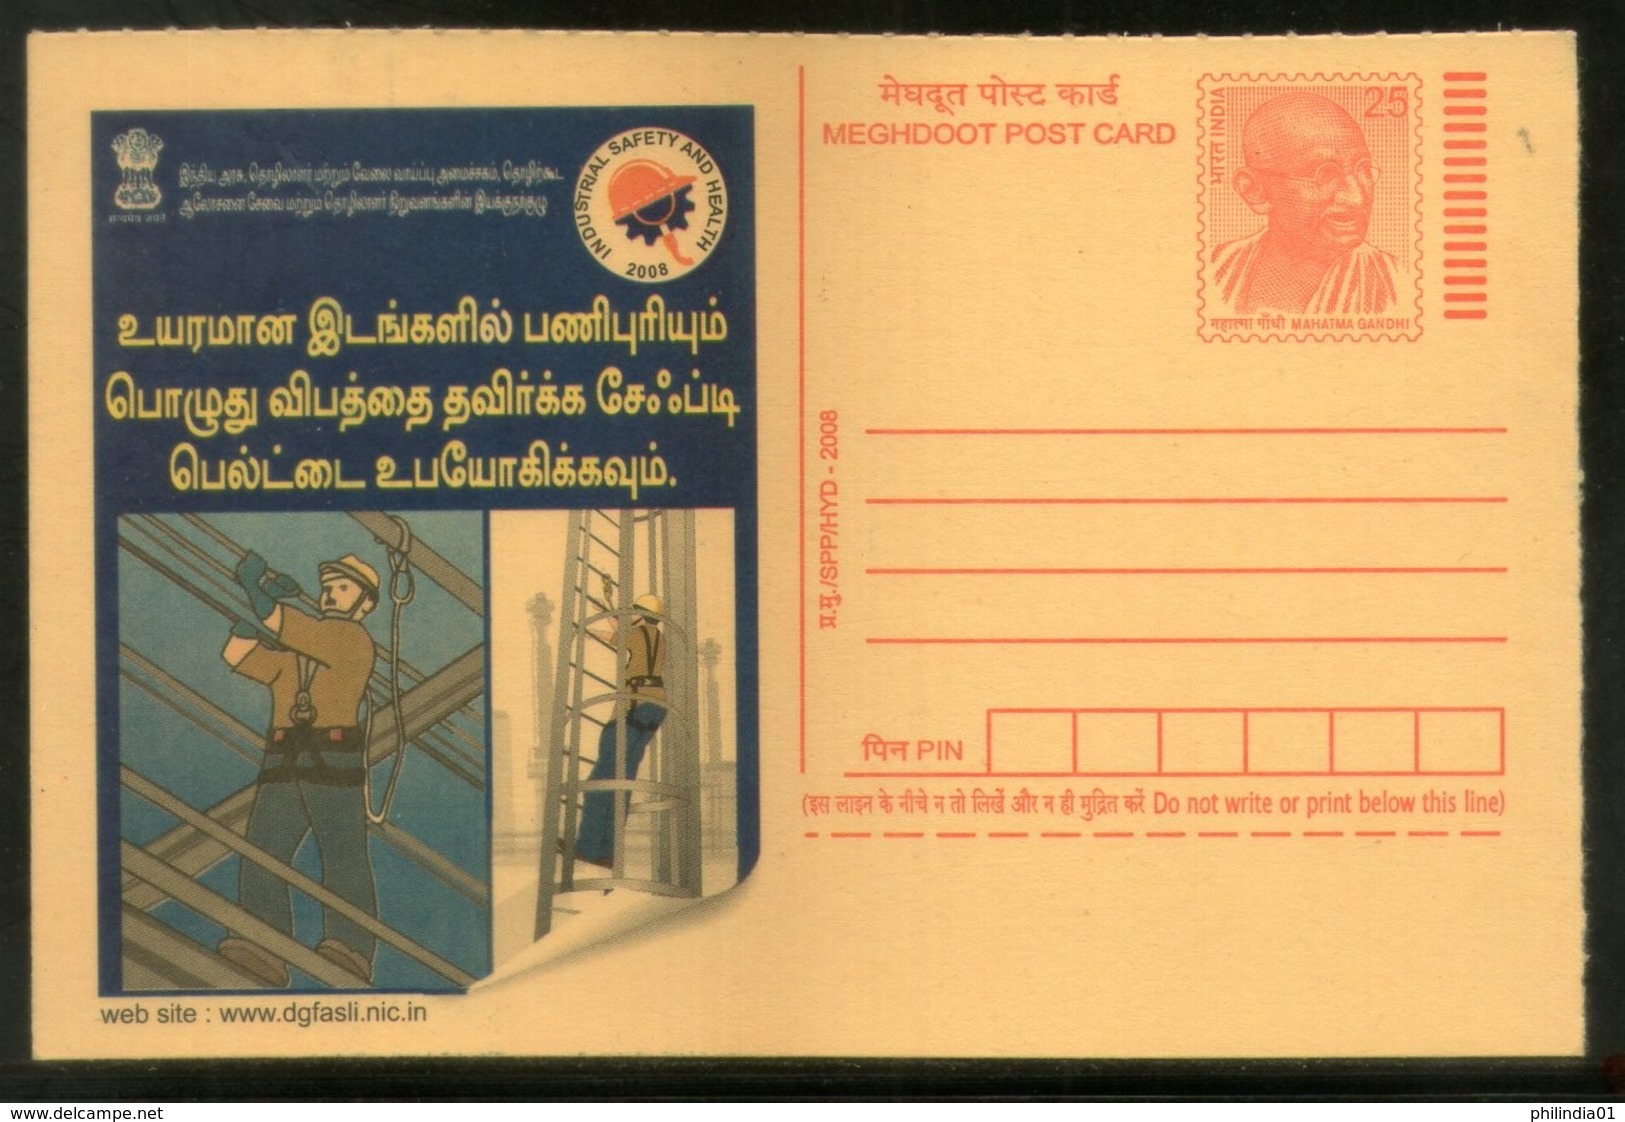 India 2008 "Use Safety Belts On High" Industrial Safety & Health Job Tamil Advert Gandhi Post Card # 504 - Ongevallen & Veiligheid Op De Weg